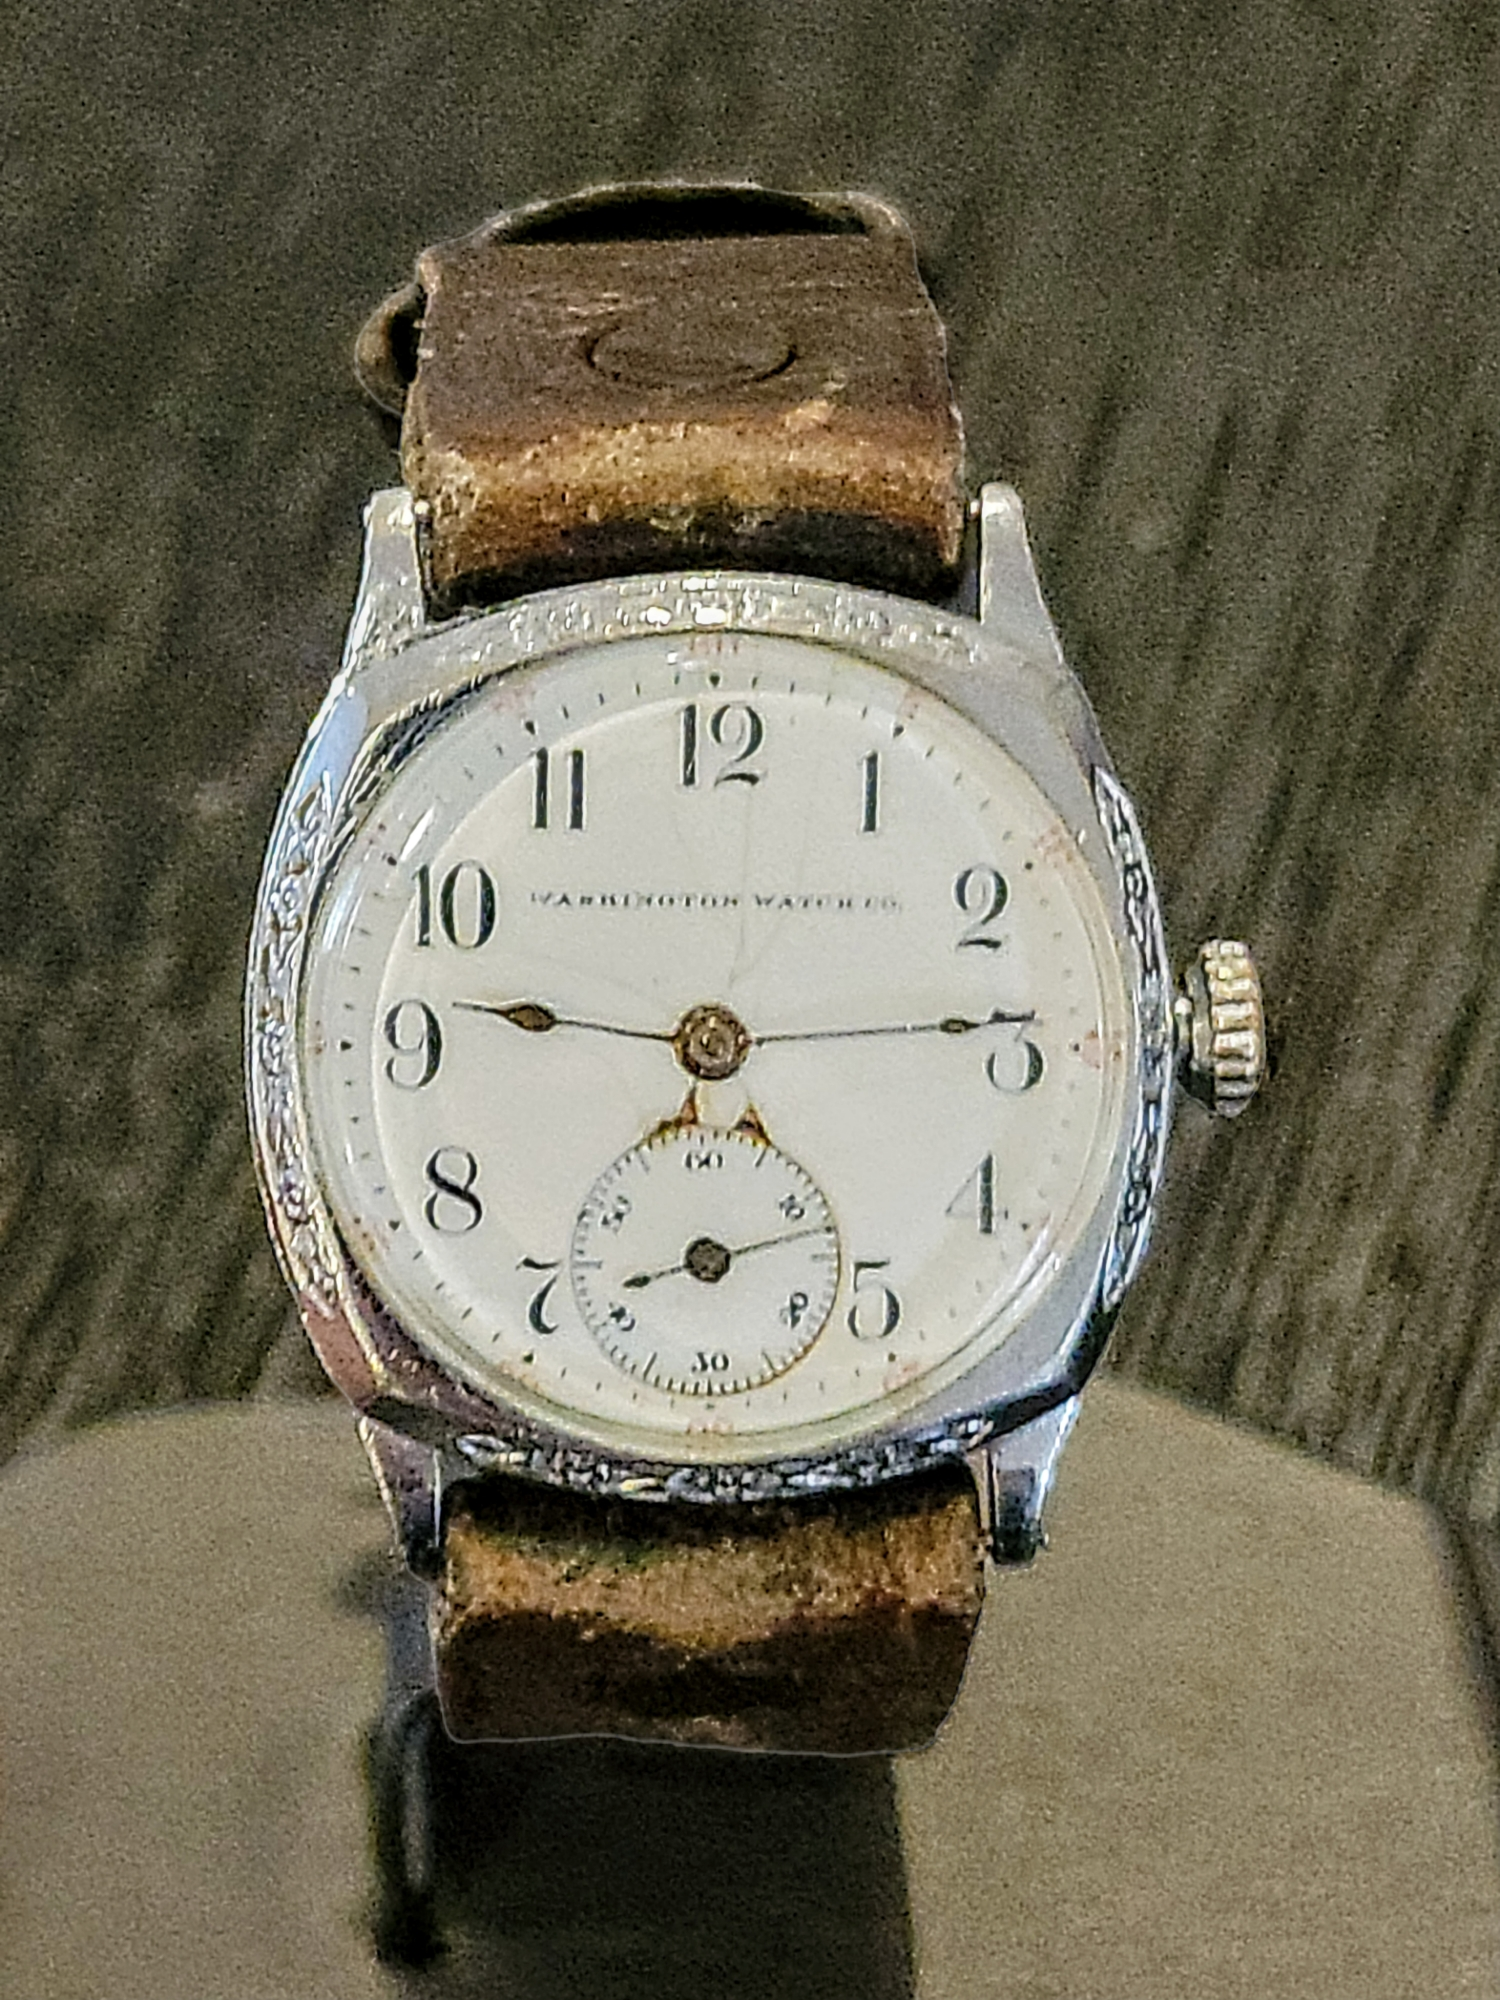 1914 WASHINGTON Wristwatch By Illinois Watch Co. Grade 35 U.S.A.